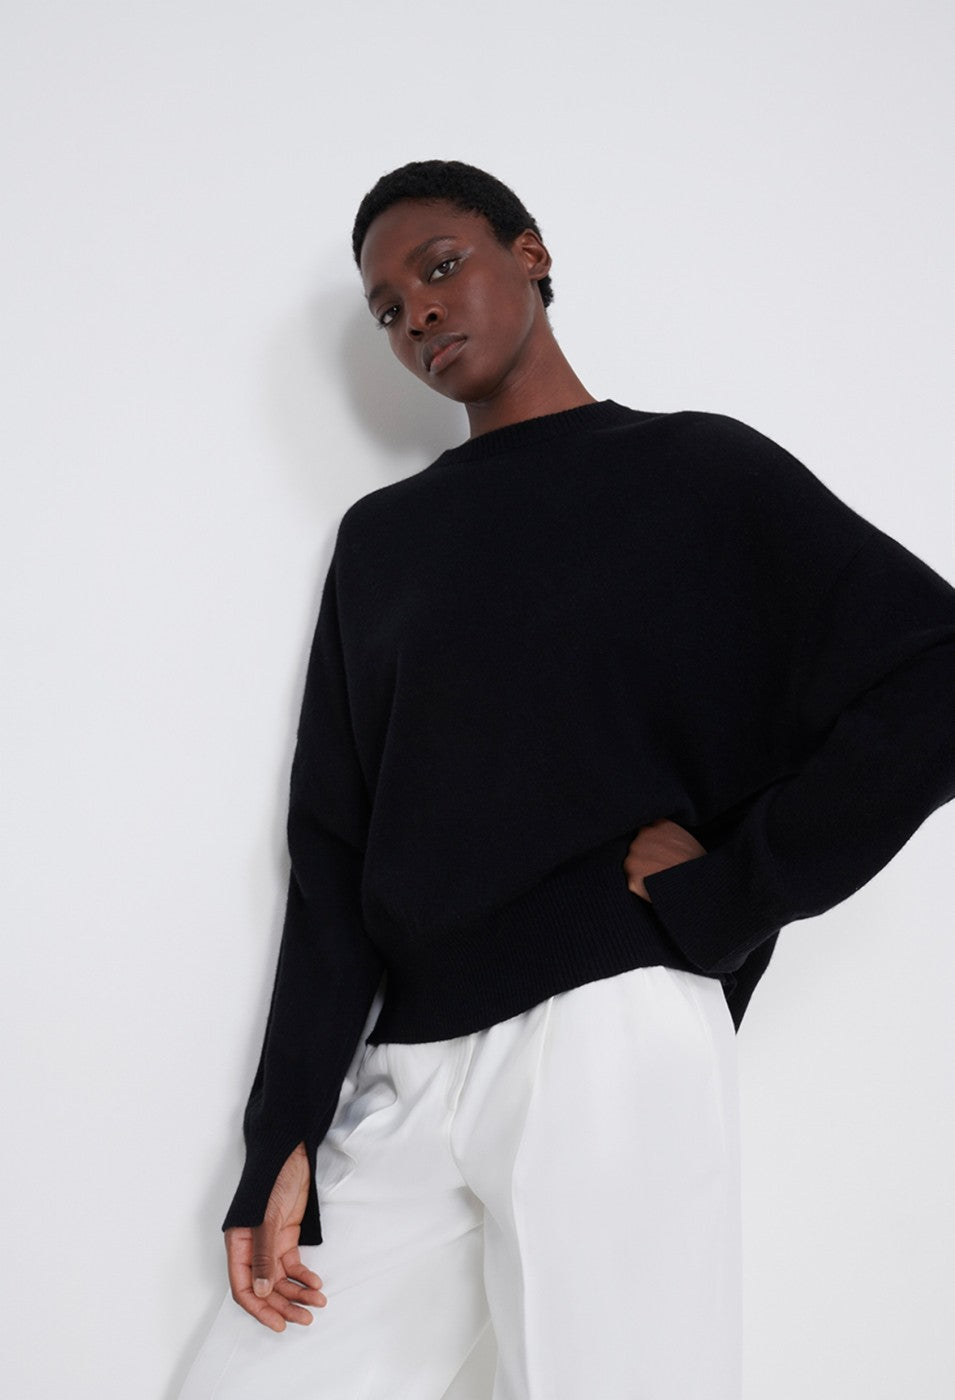 LouLou Studio Anaa Cashmere Sweater - Black